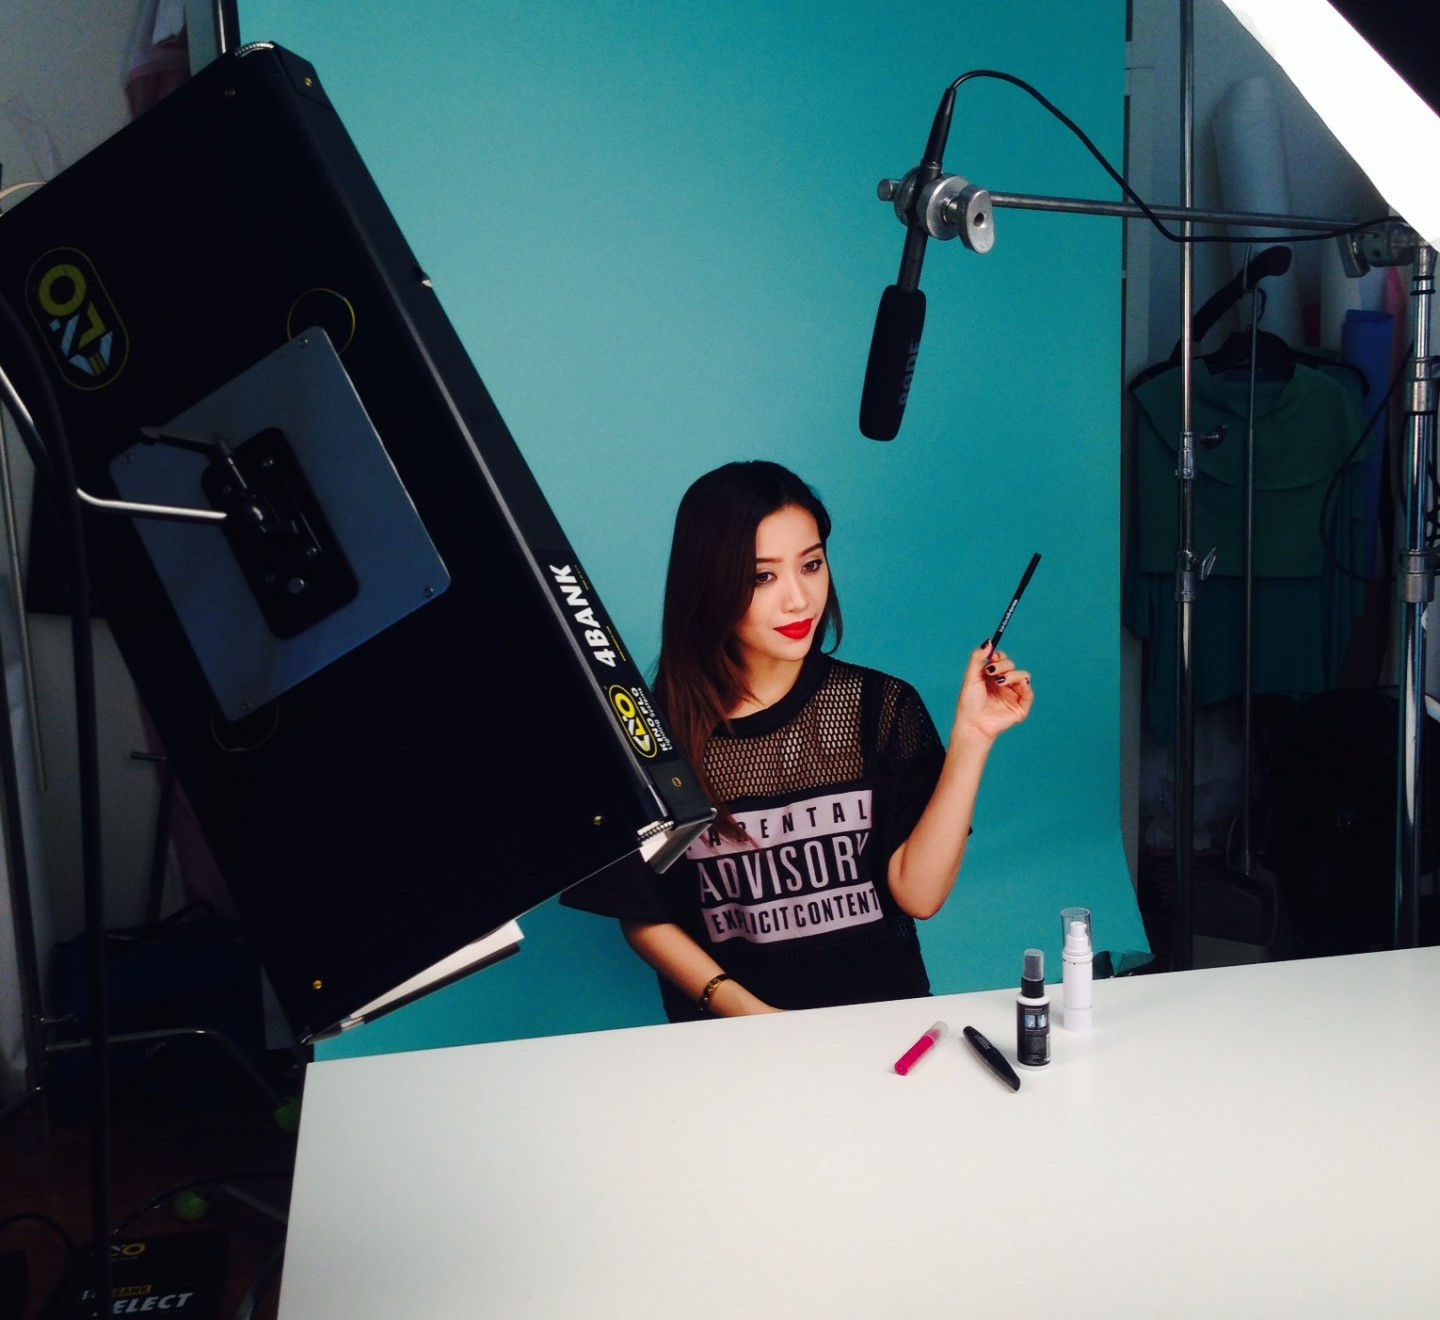 Michelle Phan - YouTube Star, Founder of ipsy